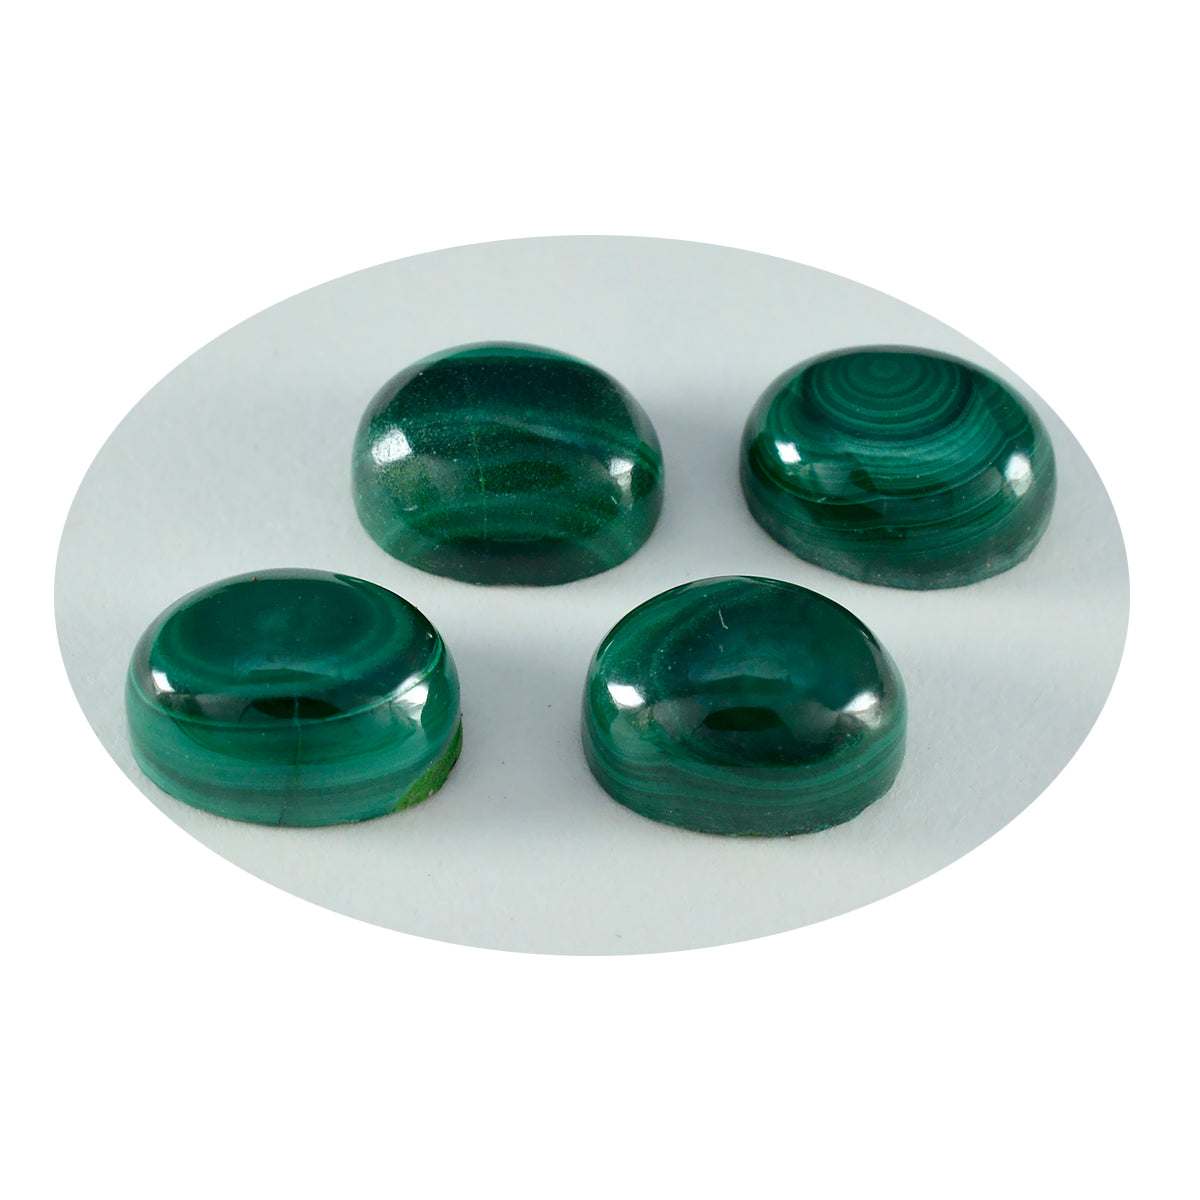 riyogems 1pc グリーン マラカイト カボション 6x8 mm 楕円形、素晴らしい品質の石